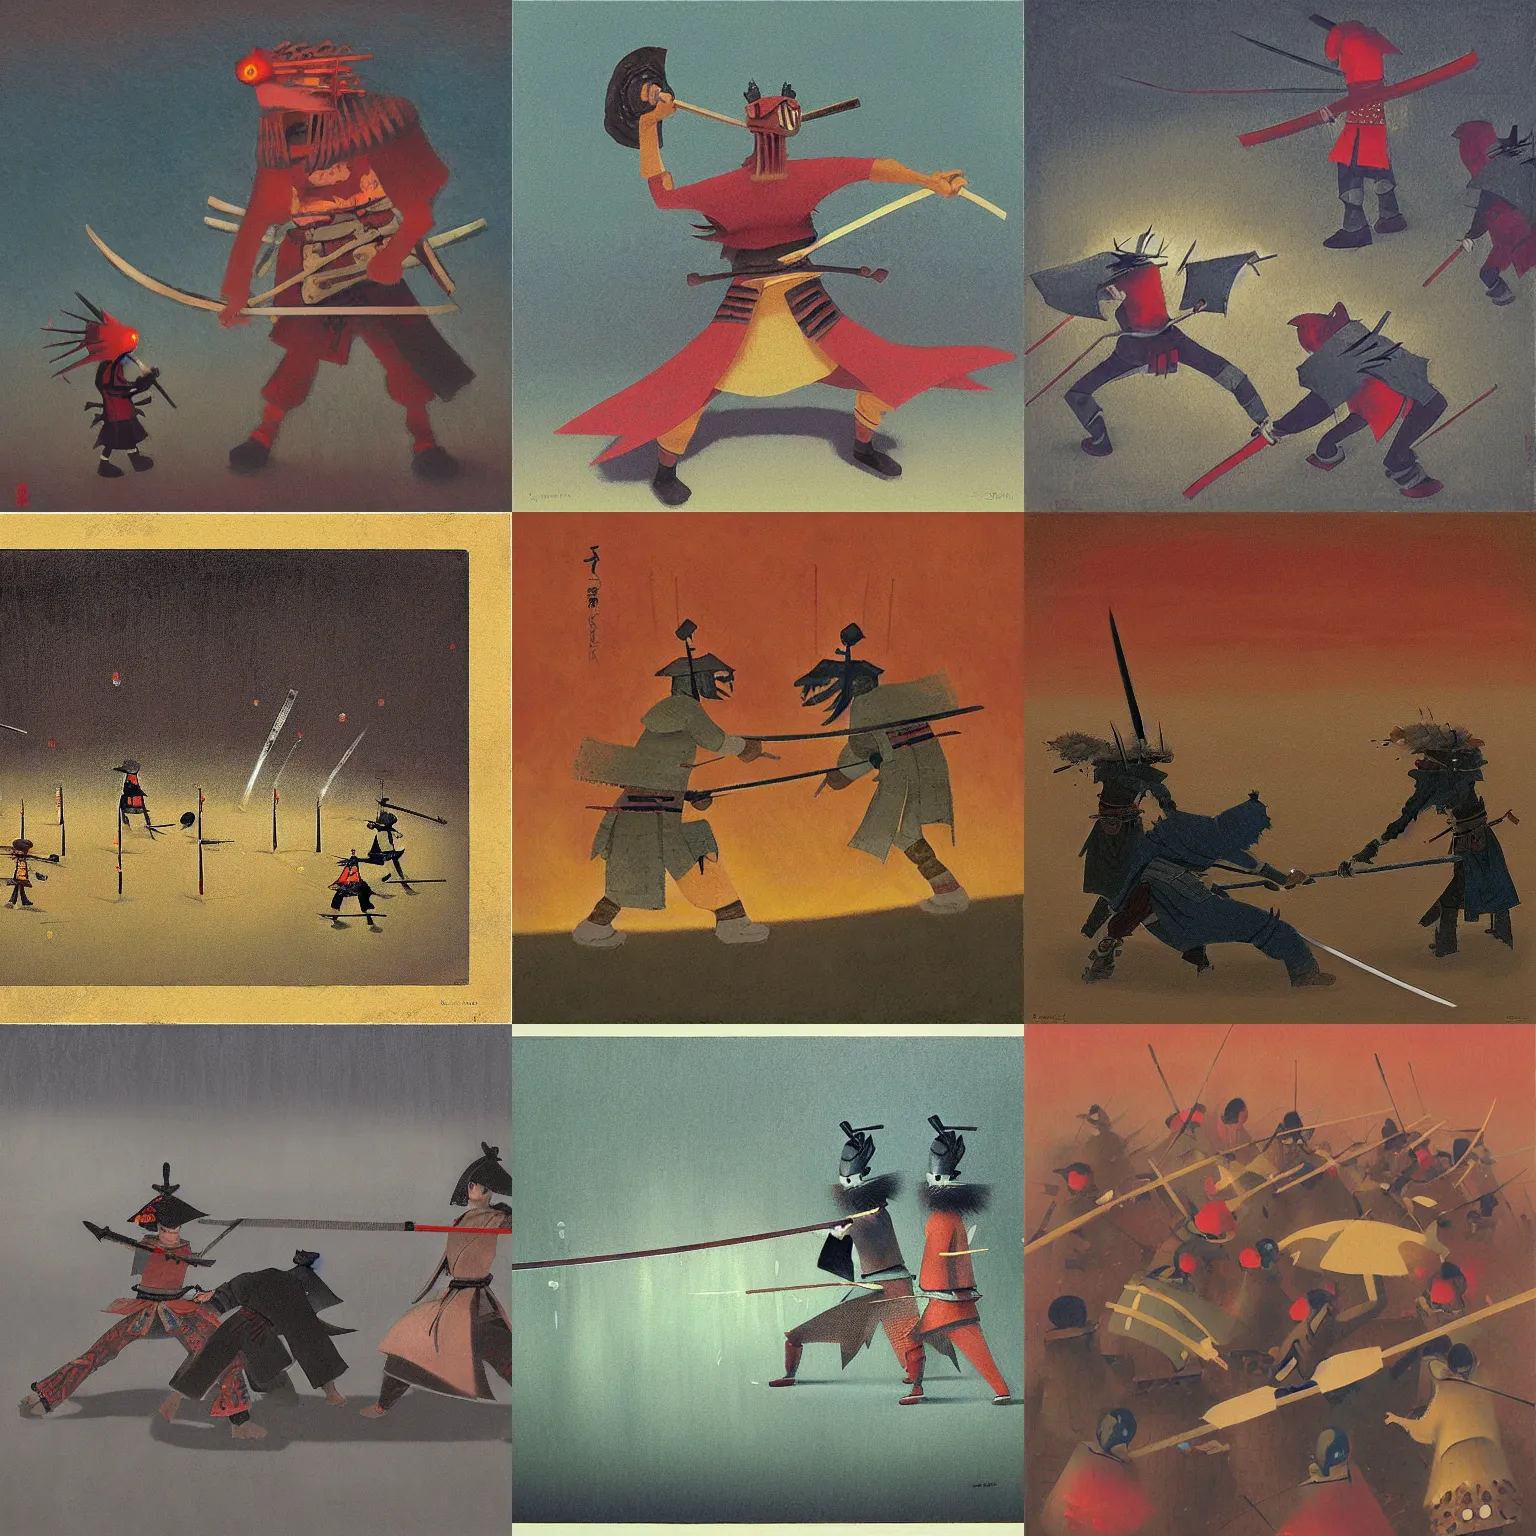 Prompt: samurai battle by shaun tan